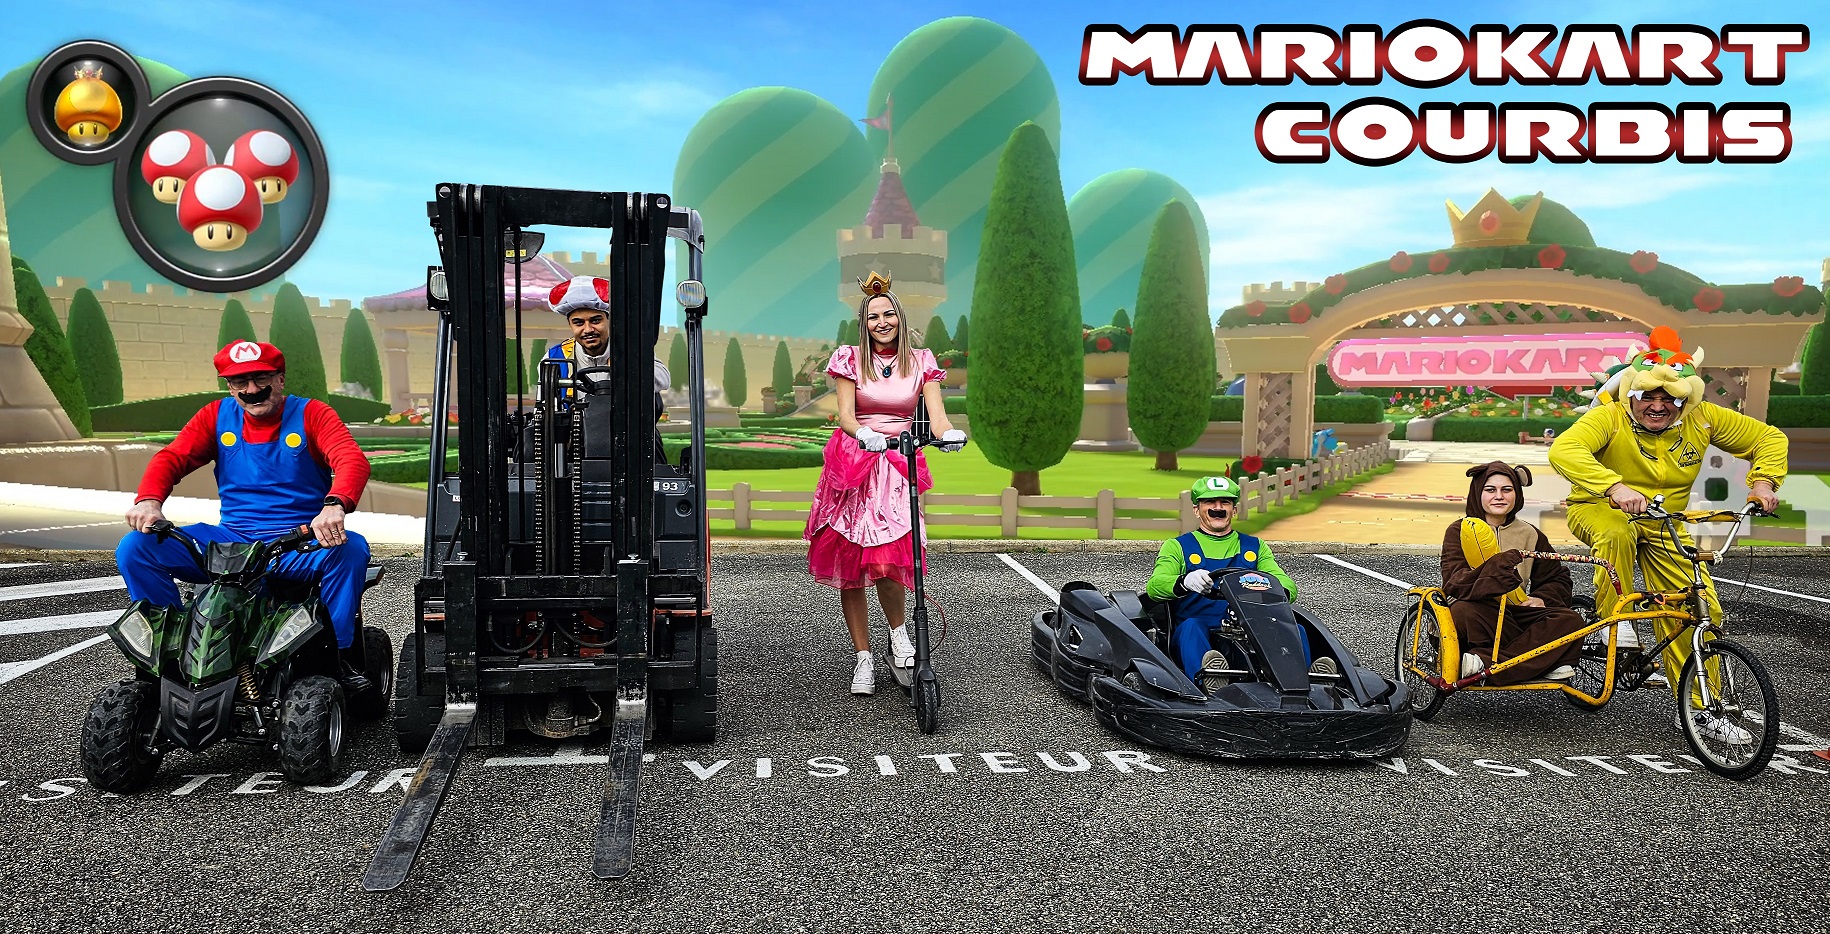 Mario Kart Courbis